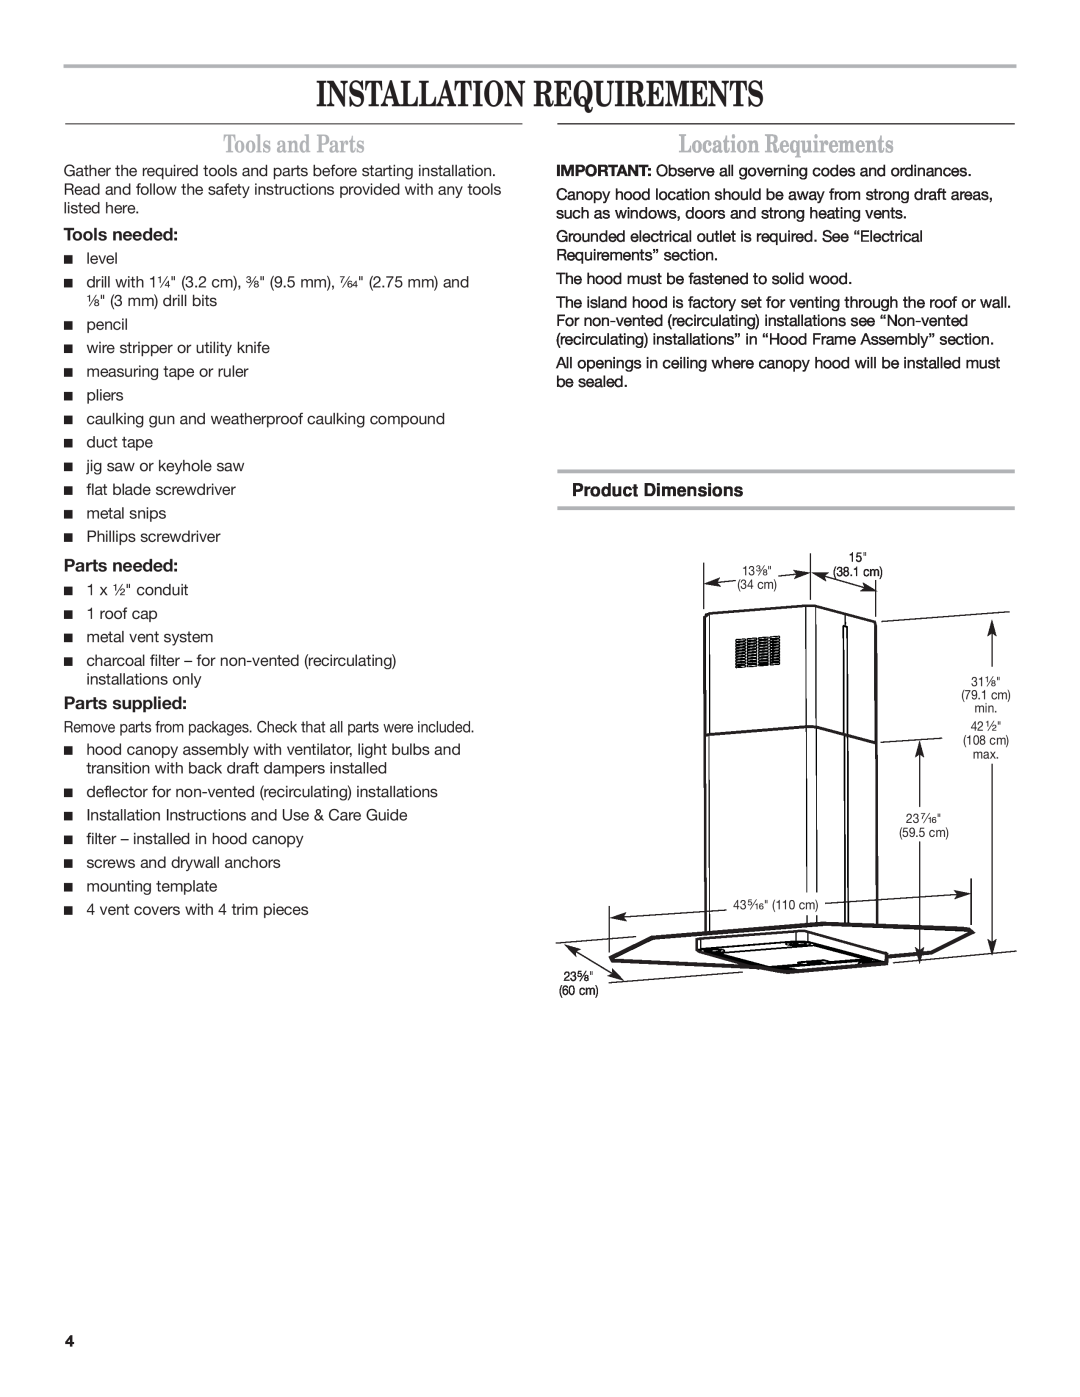 Whirlpool Ventilation Hood Installation Requirements, Tools and Parts, Location Requirements, Tools needed, Parts needed 